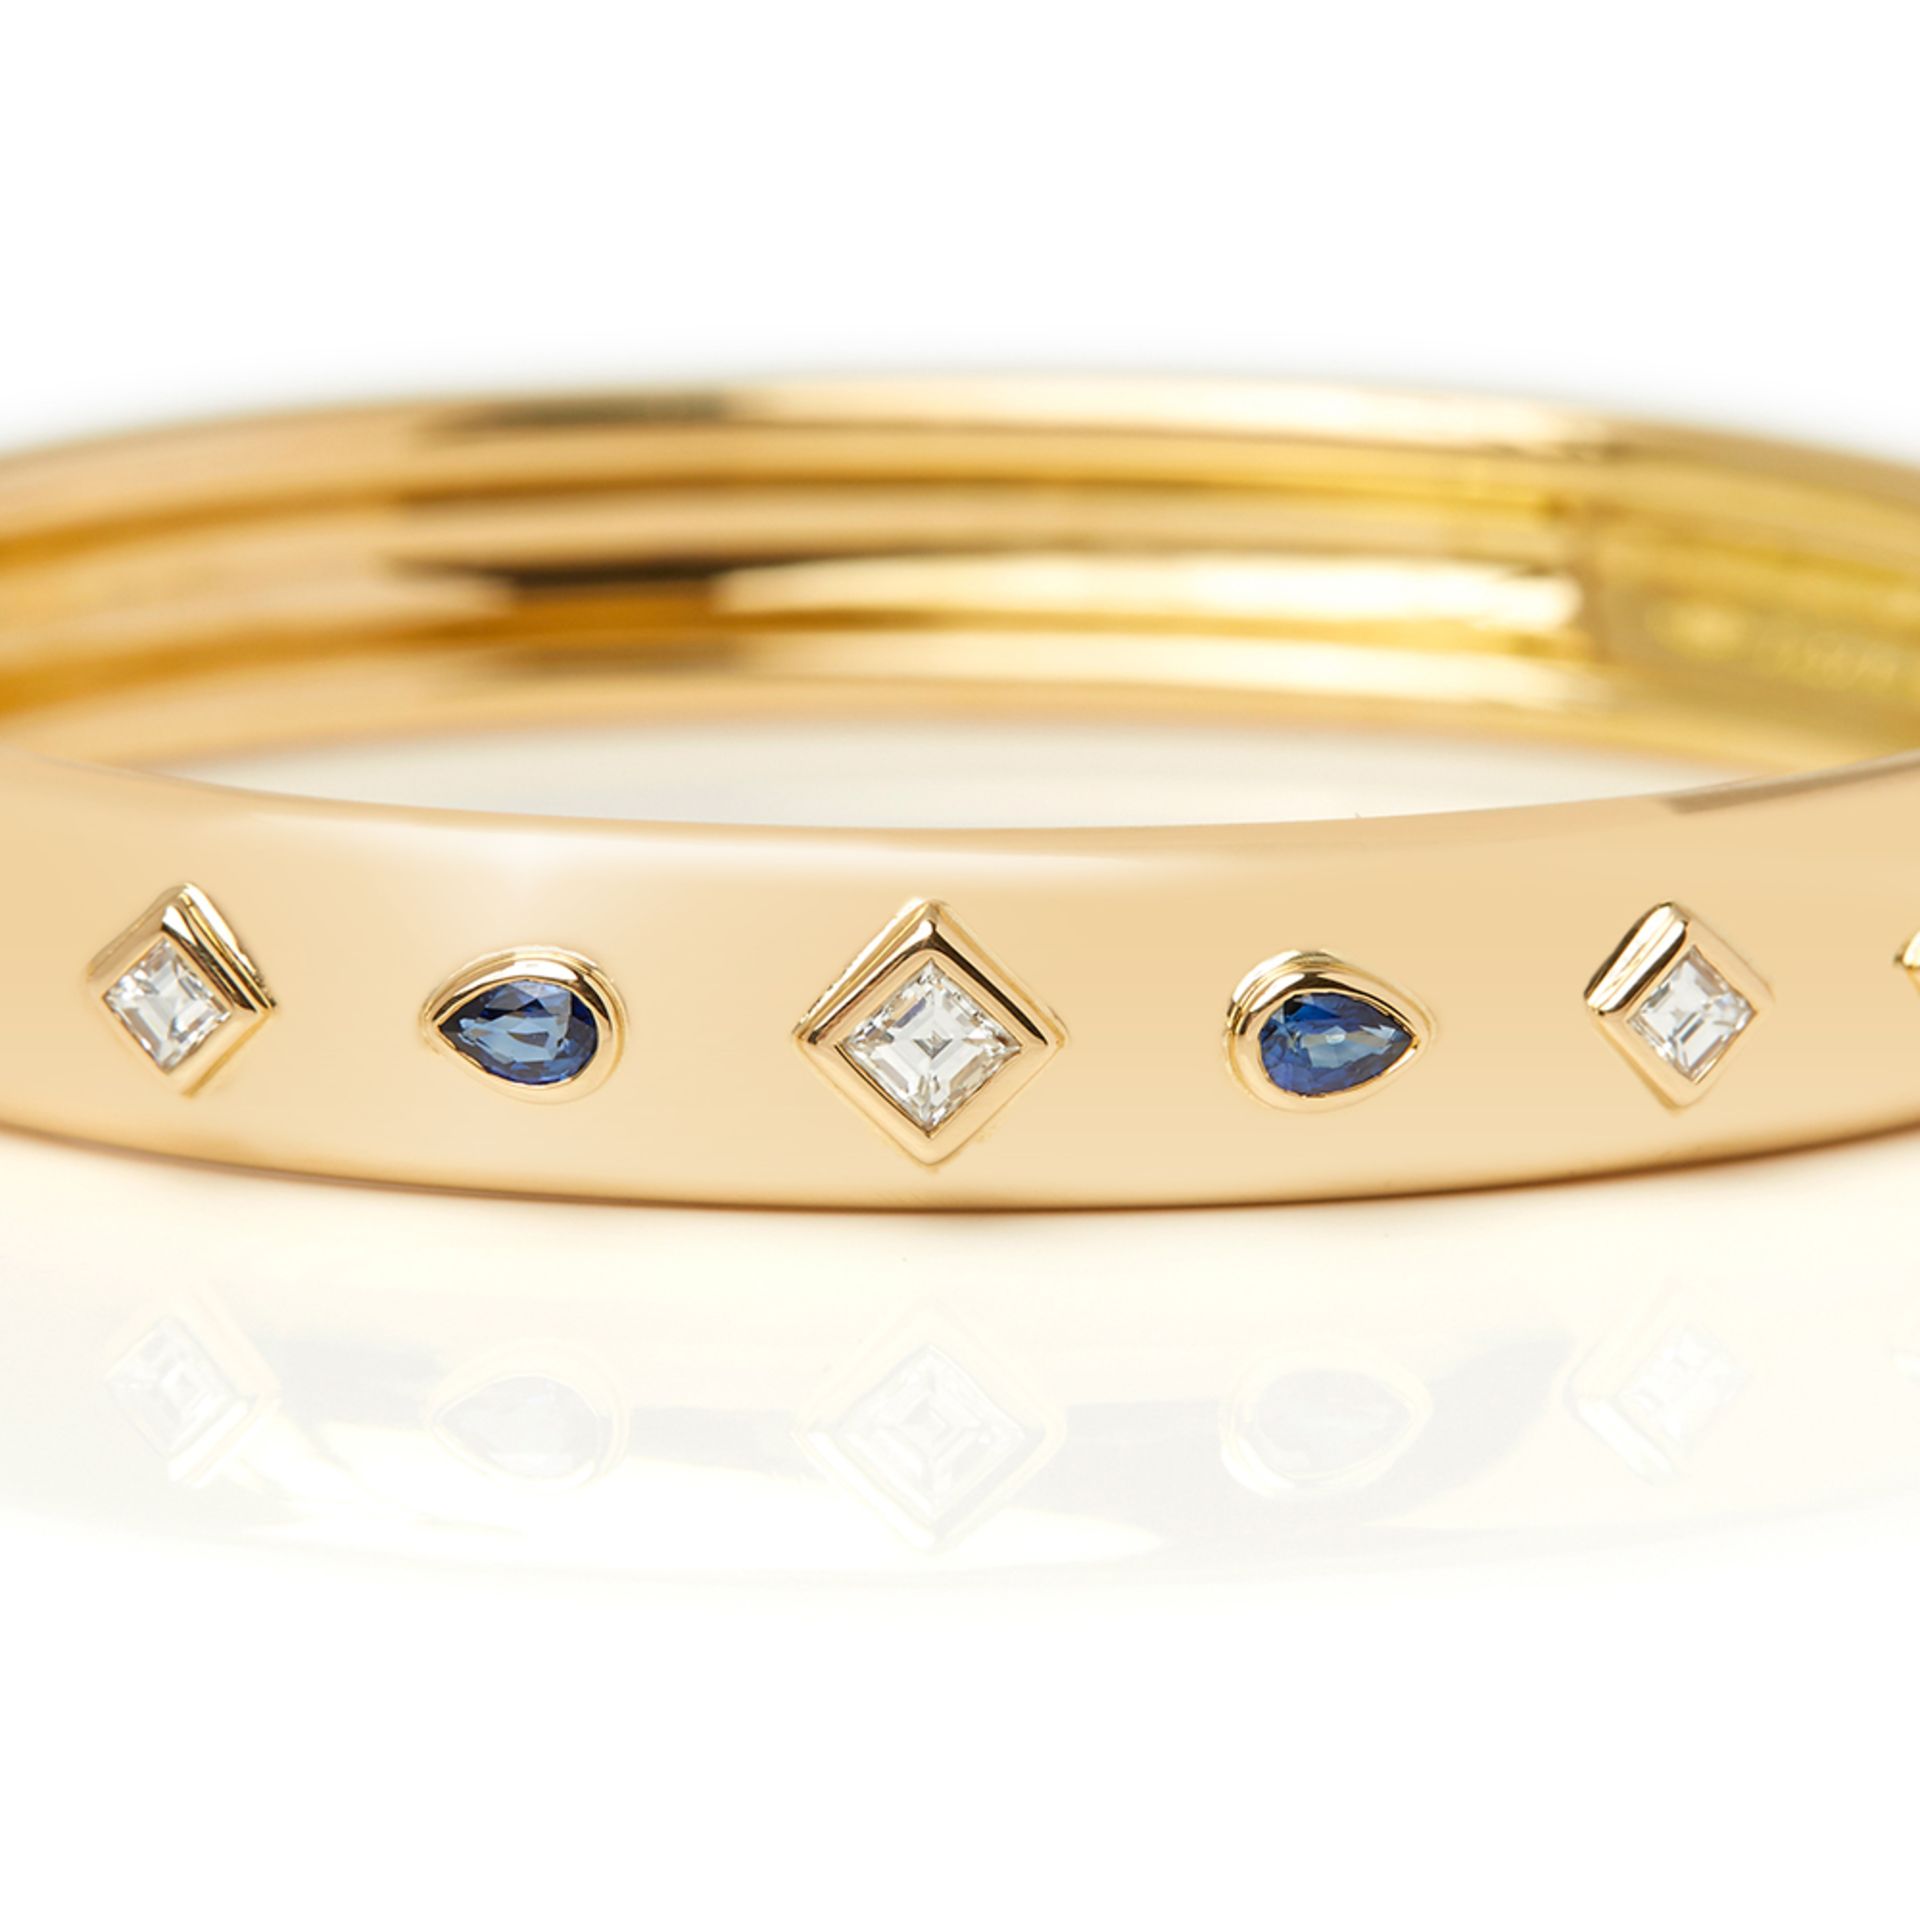 Cartier 18k Yellow Gold Sapphire & Diamond Cuff Bracelet - Image 4 of 7